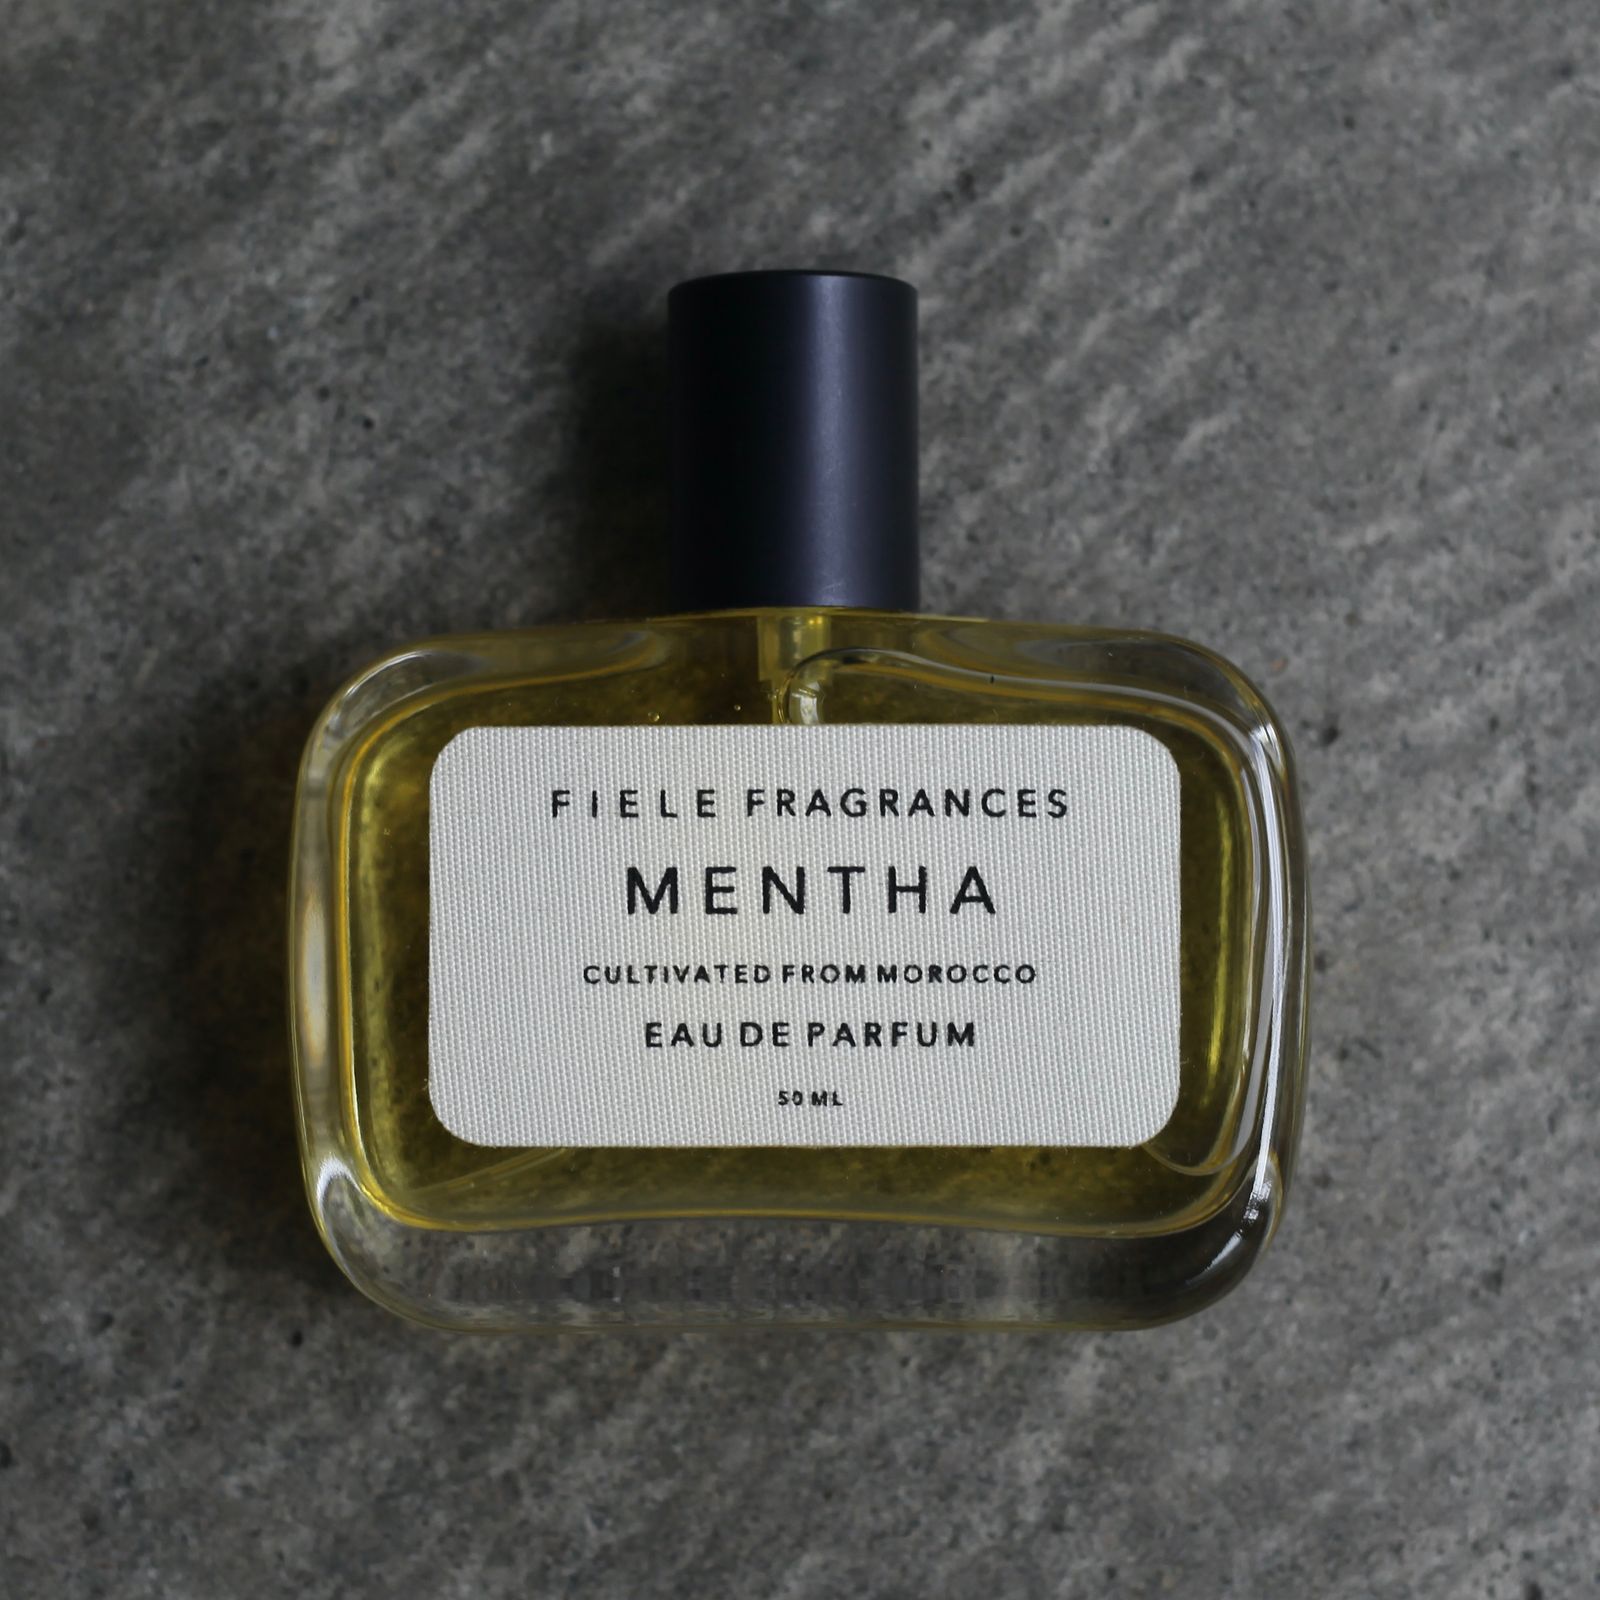 FIELE FRAGRANCES - 【残りわずか】Eau De Parfum 50ml(MENTHA